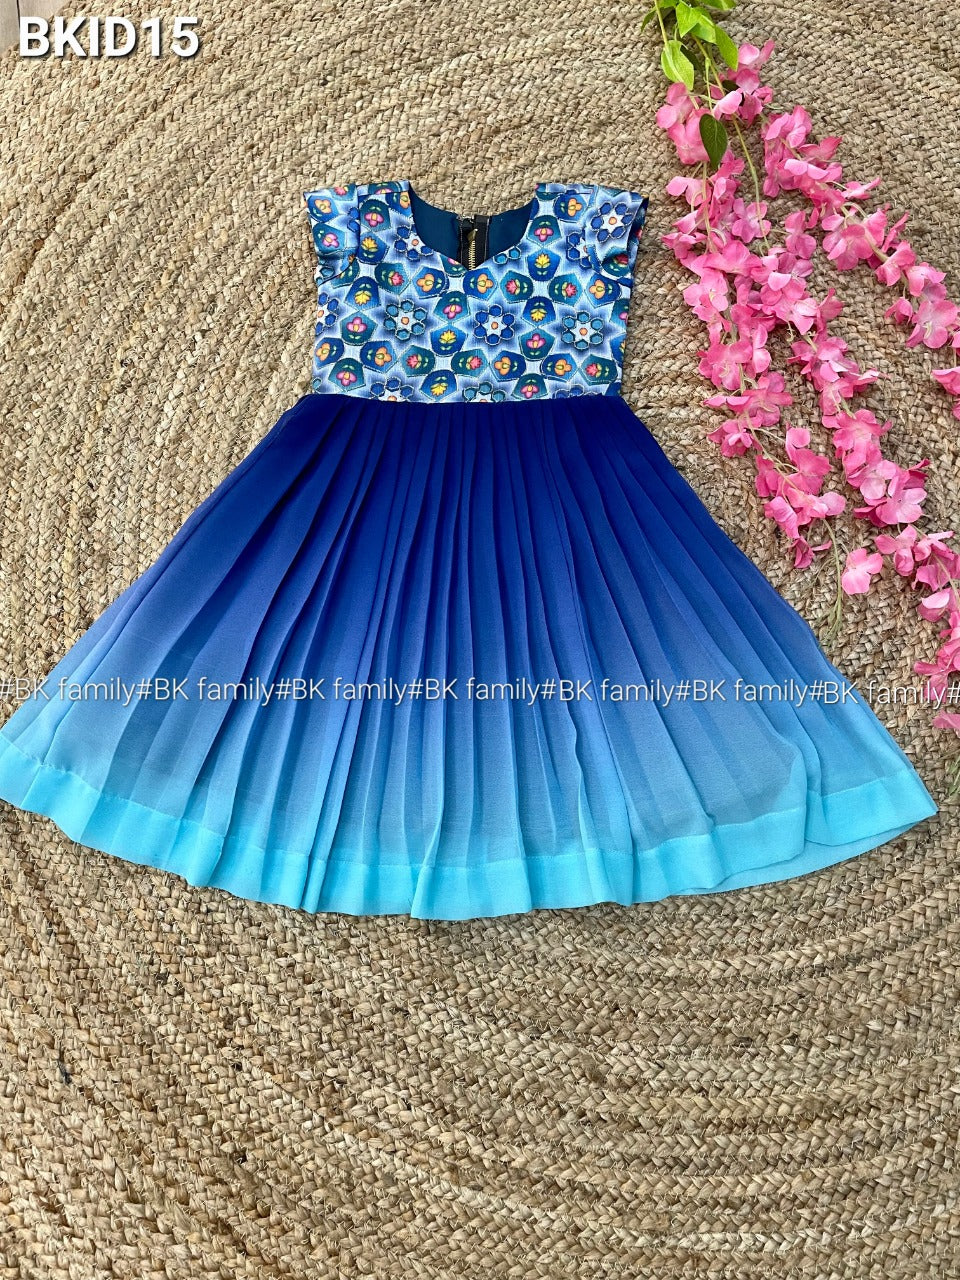 Kids Party Dresses: Buy Ethnic Party Wear Kids Dresses Online